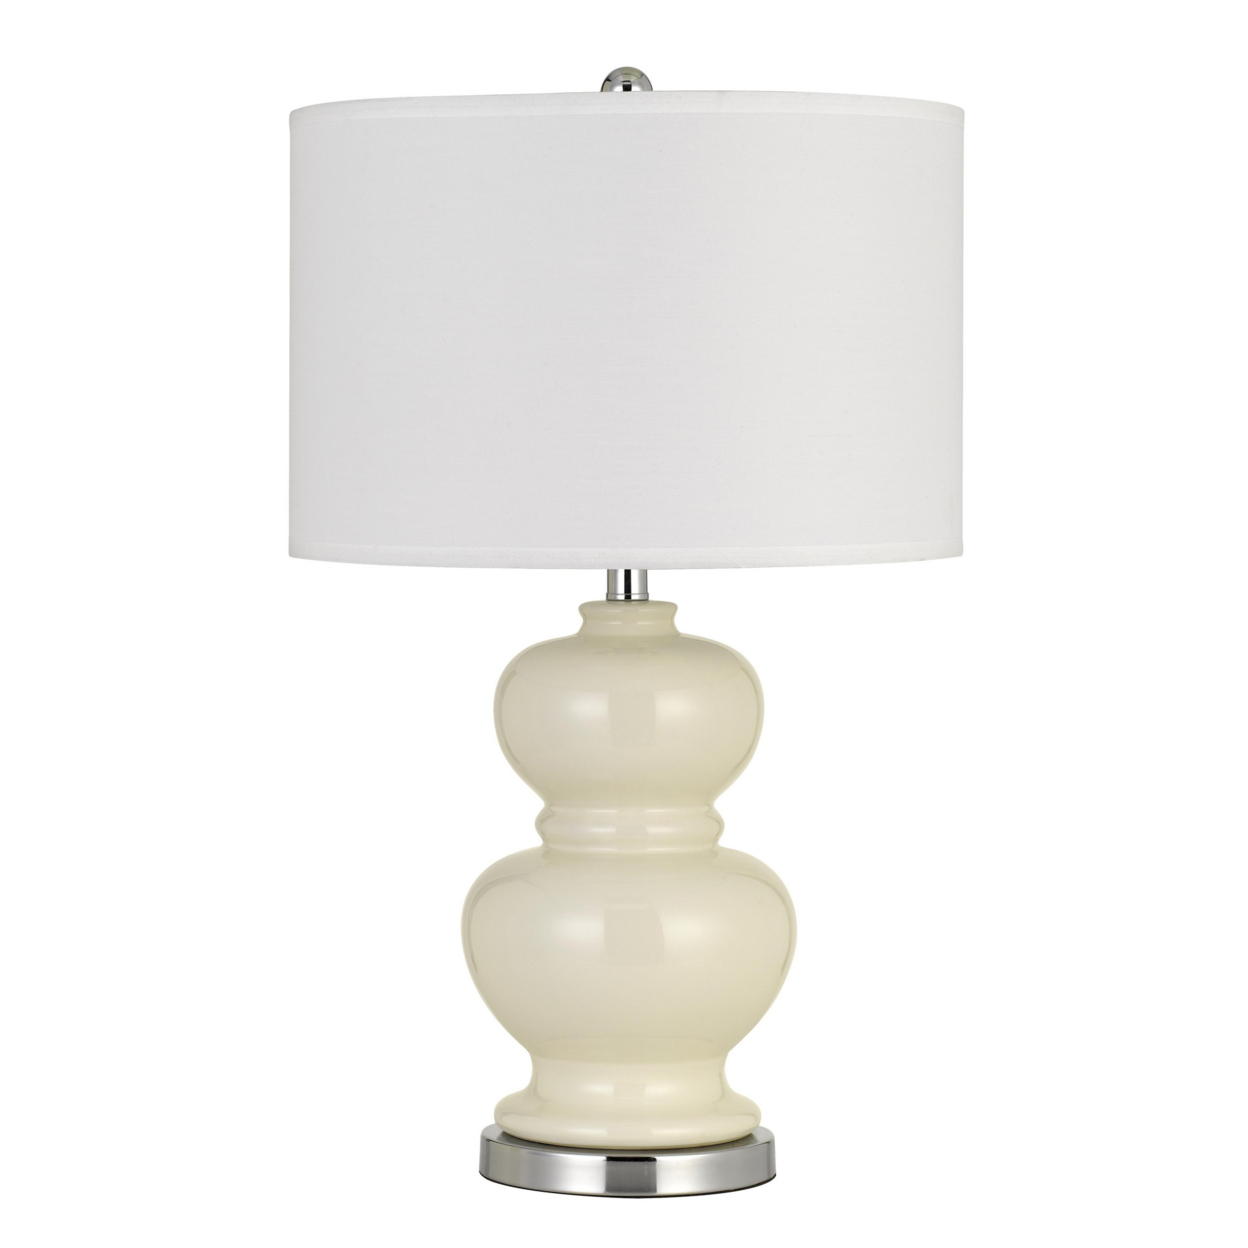 27 Ceramic Table Lamp With Hardback Style Shade, White And Silver- Saltoro Sherpi